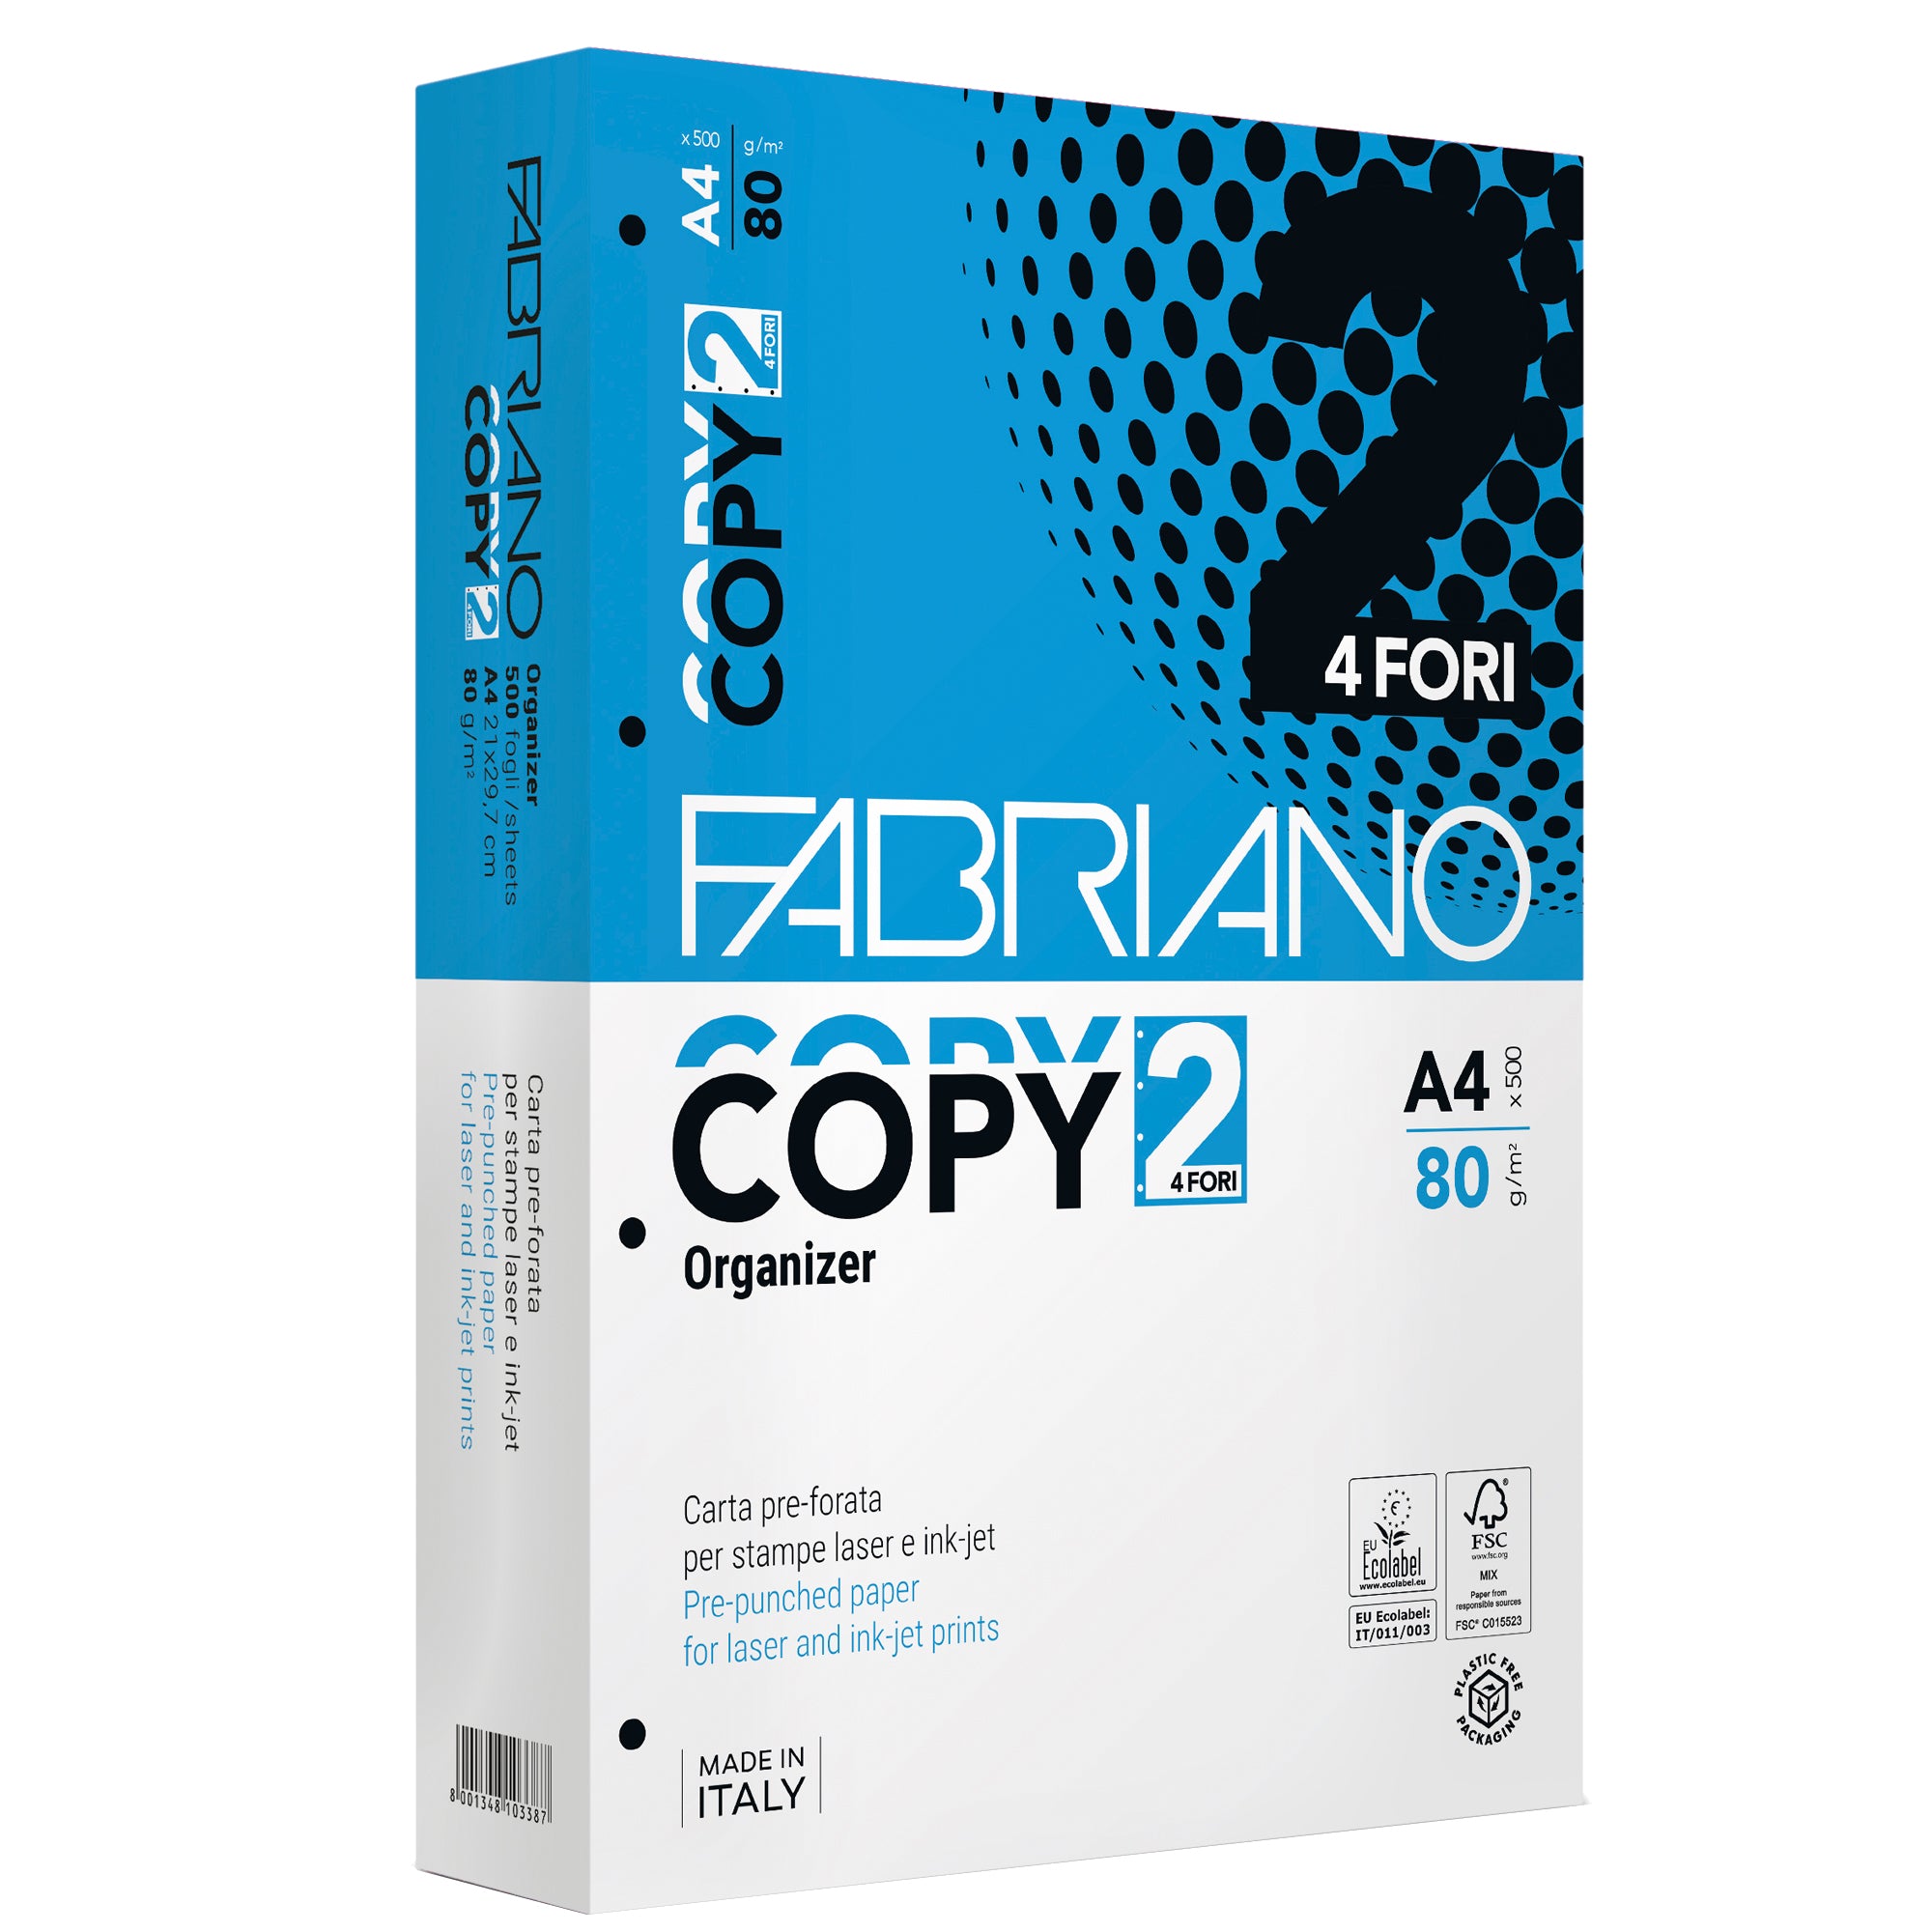 fabriano-carta-copy4-a4-80gr-500fg-4fori